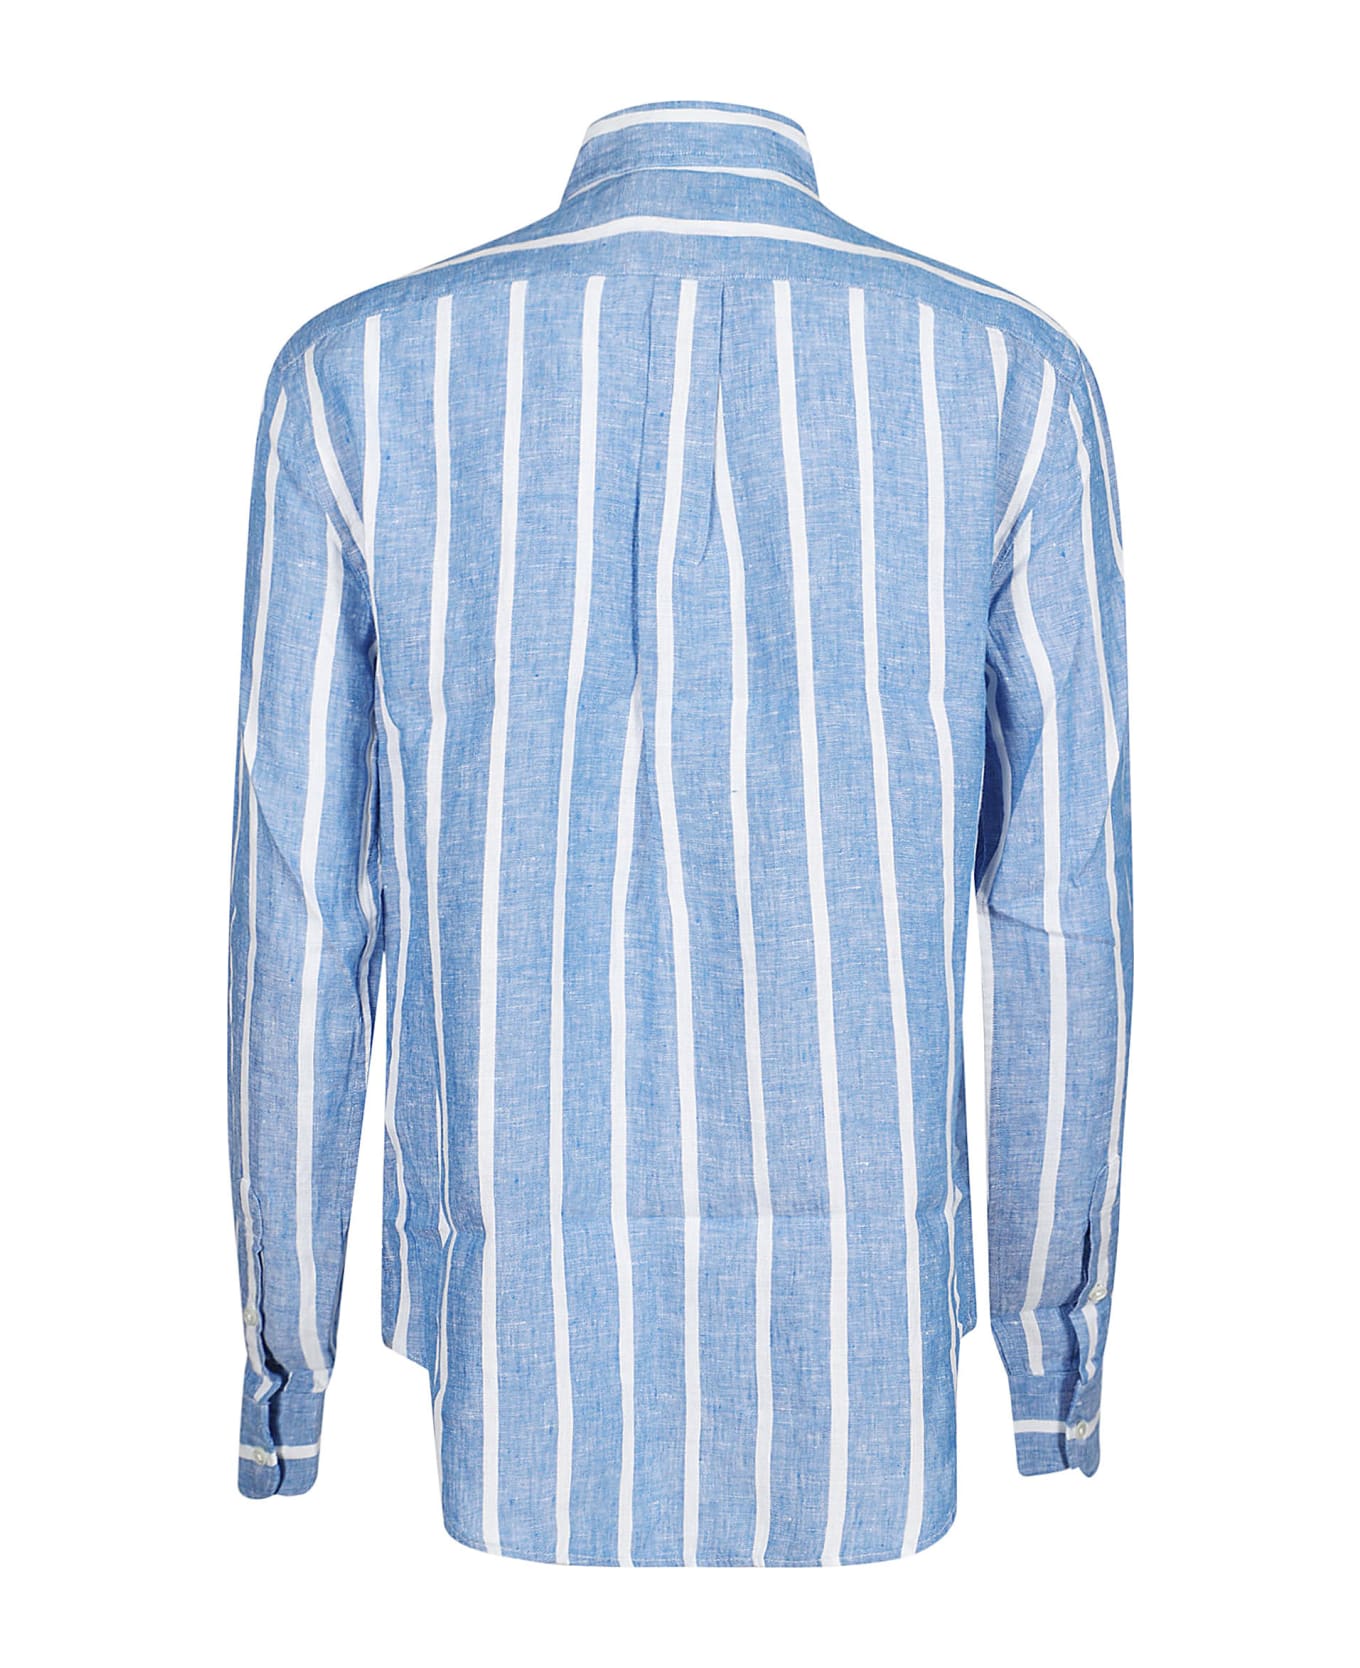 Polo Ralph Lauren Long Sleeve Button Front Shirt - Blue/white